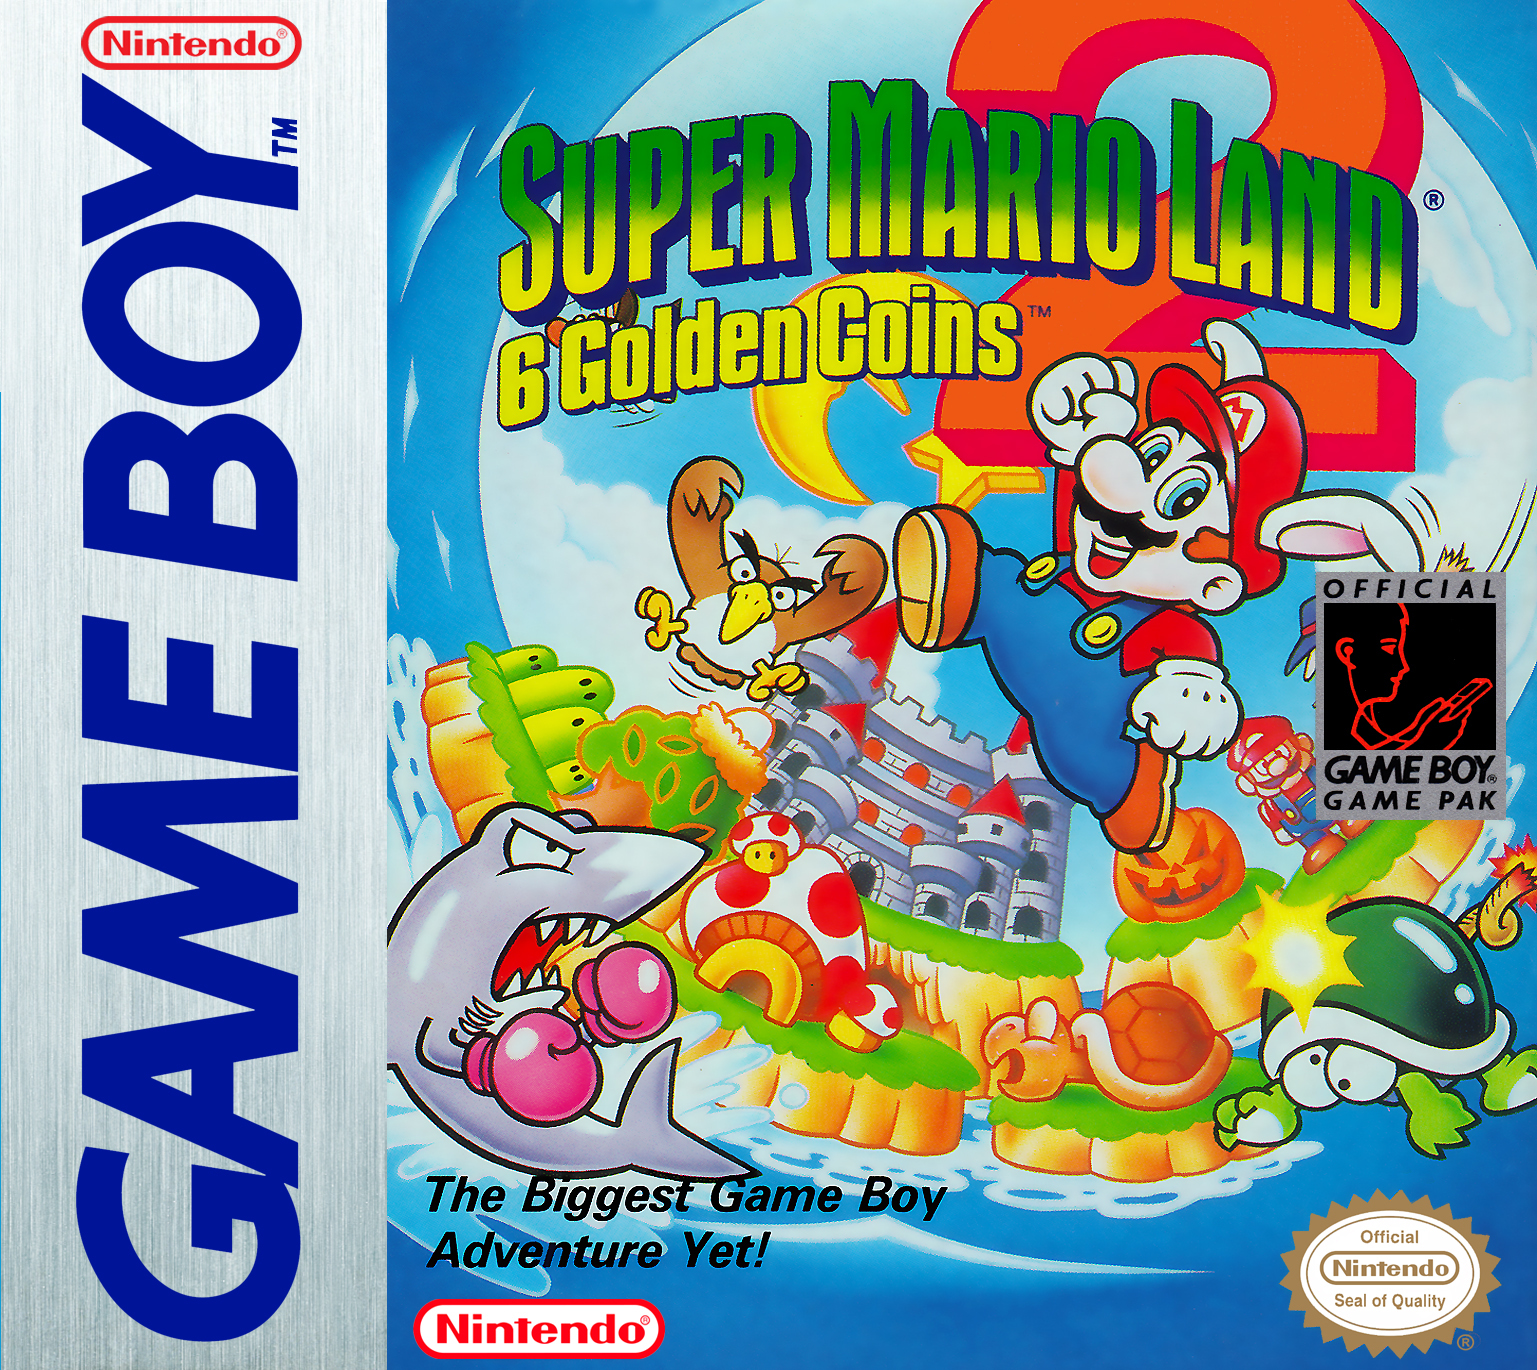 Super mario land 2 coins 6. Super Mario Land 2 6 Golden Coins. Super Mario Land game boy. Golden Land Mario. New super Mario Land.